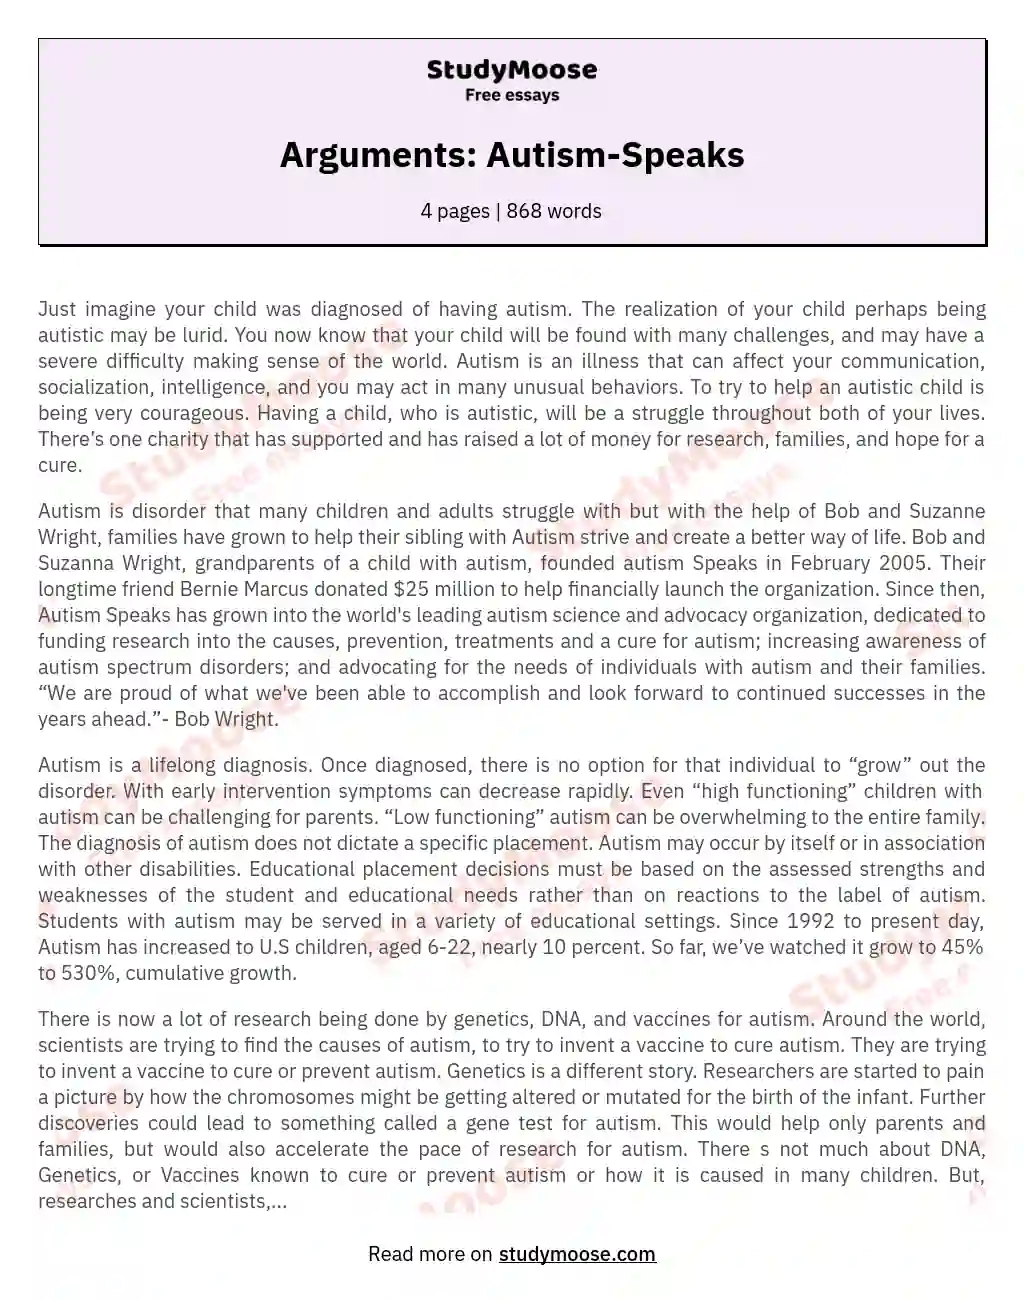 Arguments: Autism-Speaks